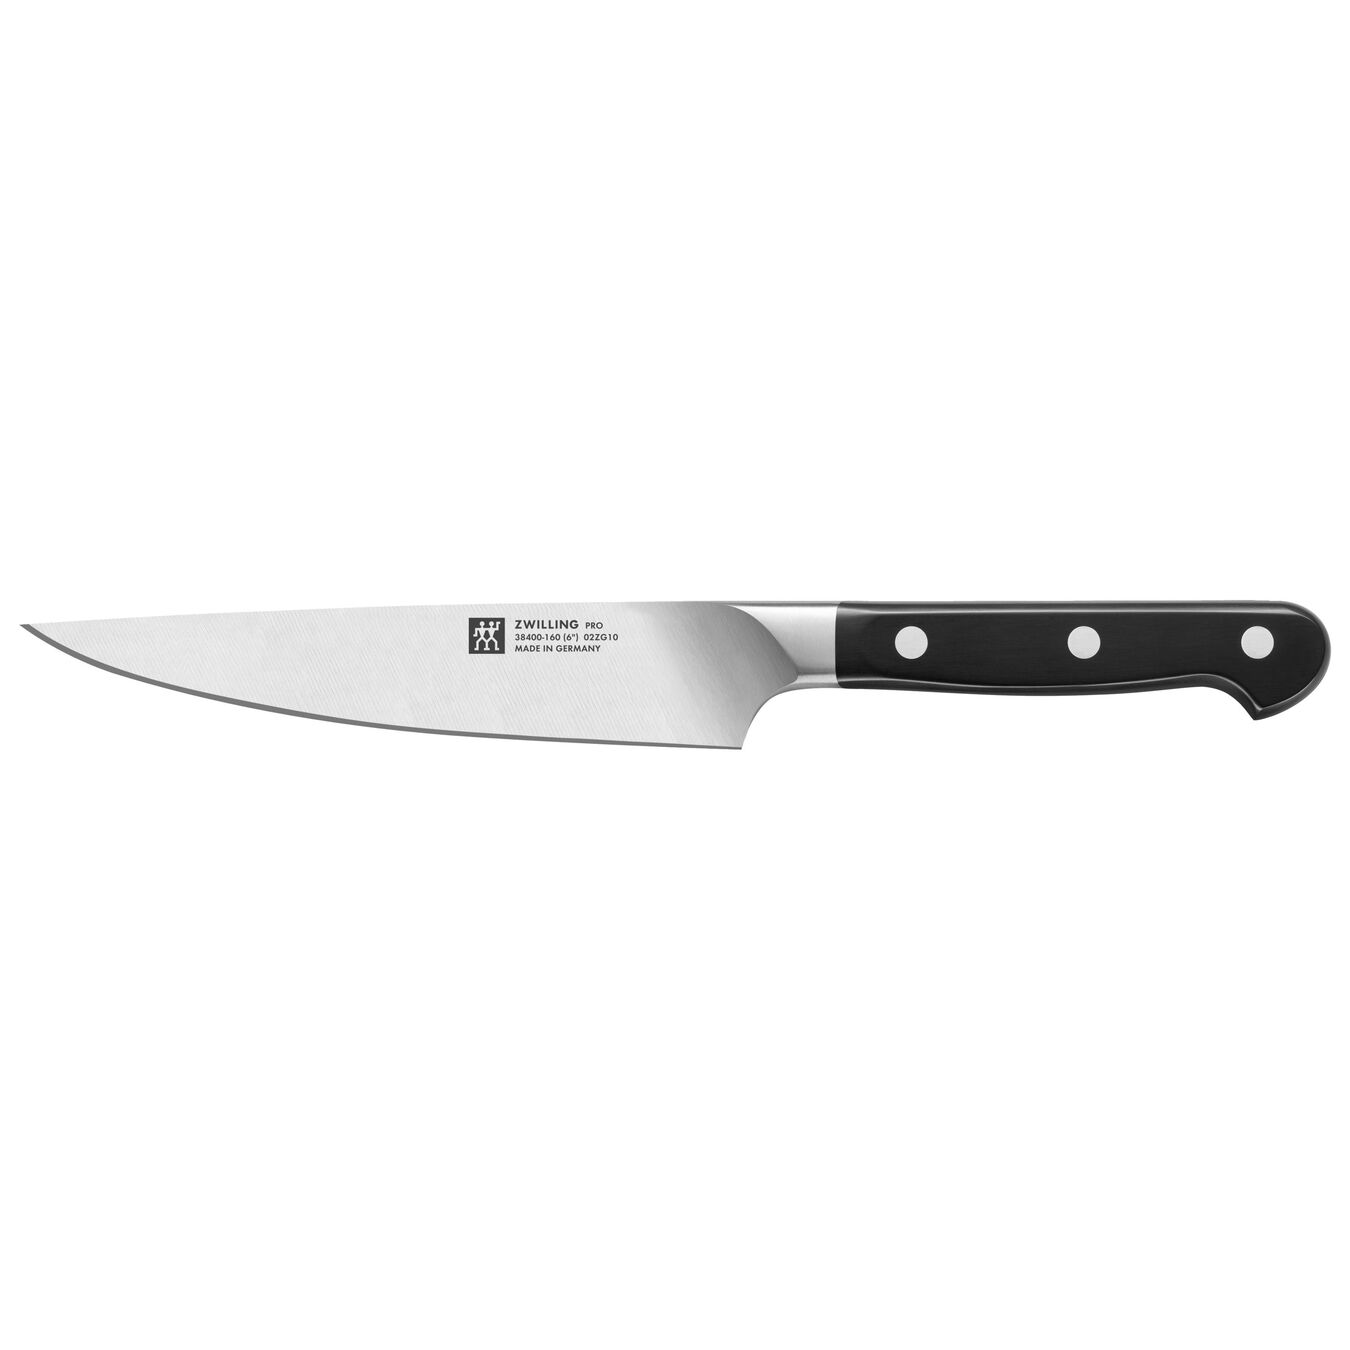 6-inch, Utility Knife,,large 1